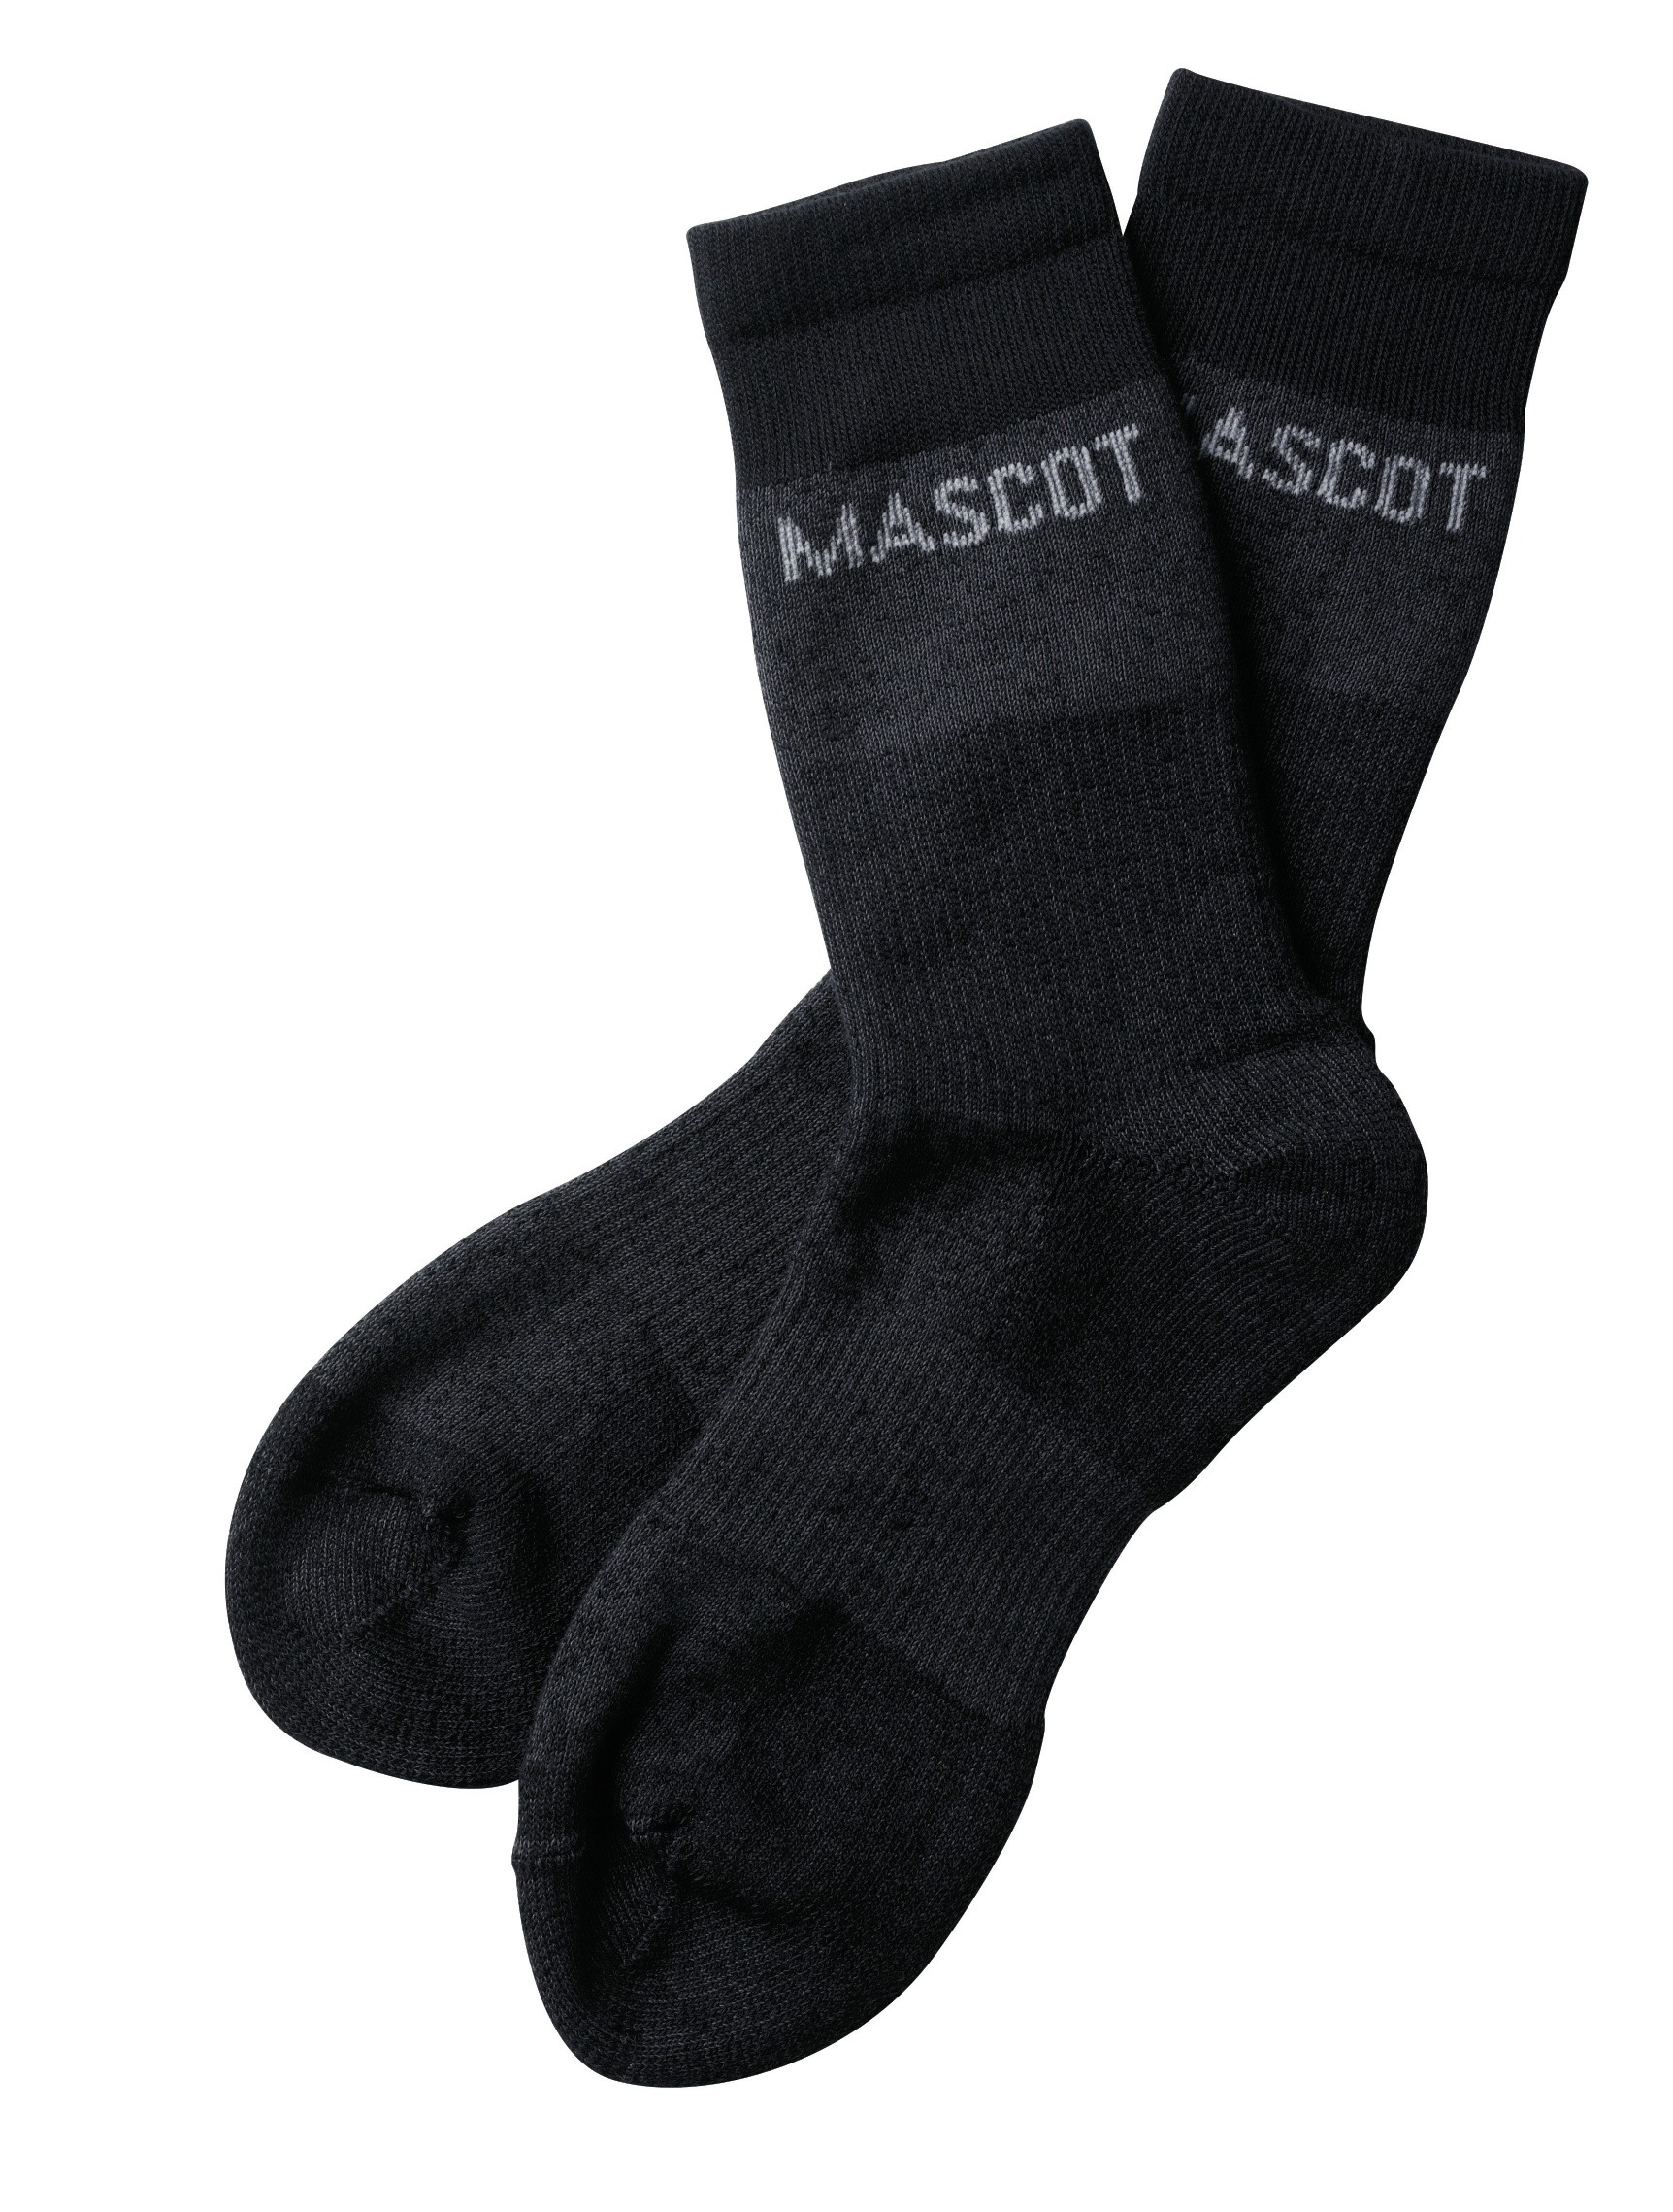 MASCOT Compete Socken "Moshi" Nr. 50406-877-A42